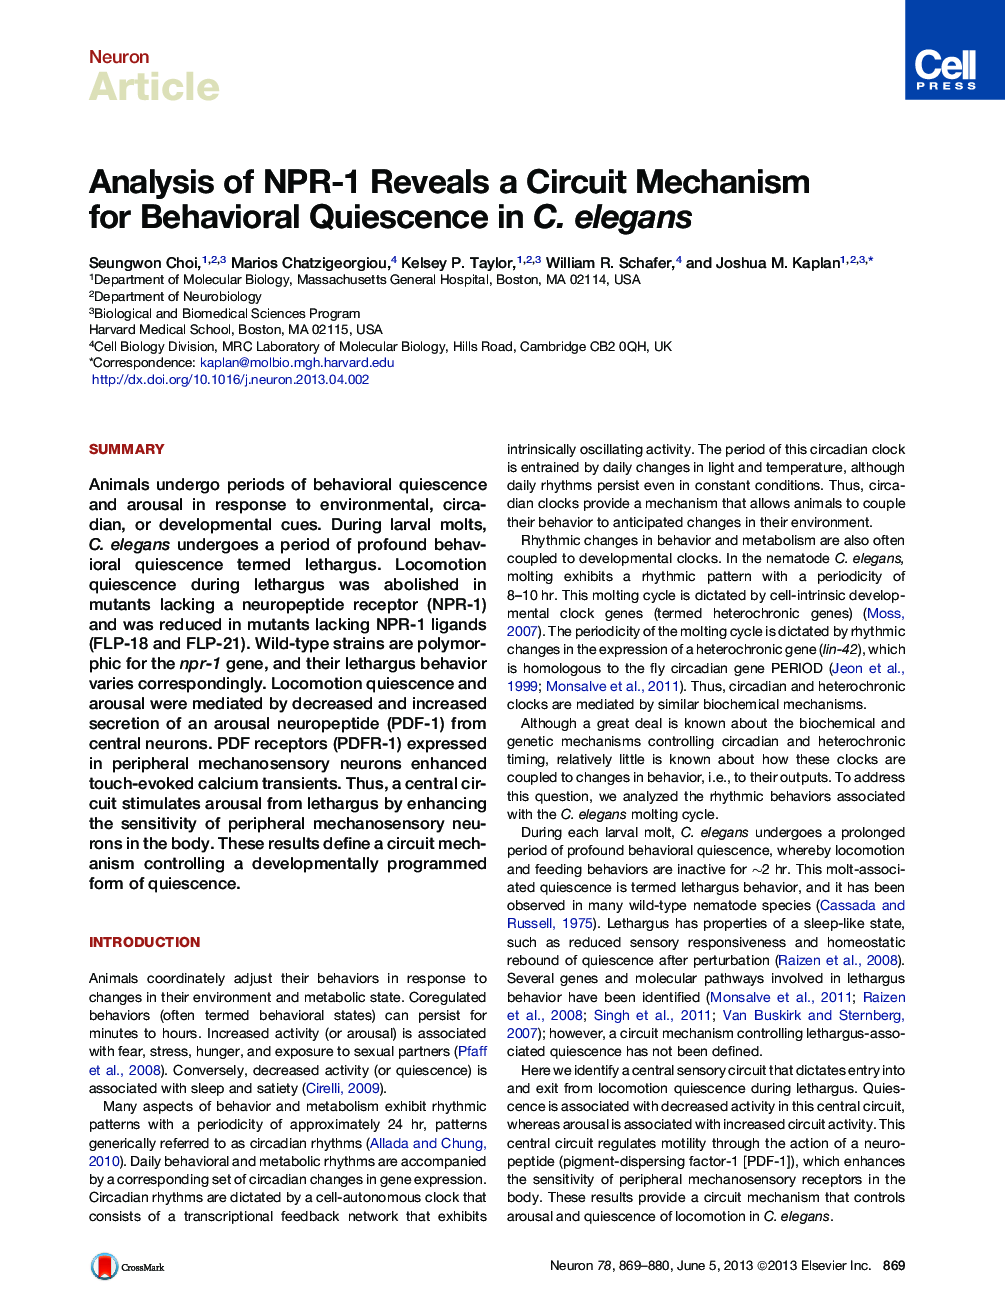 Analysis of NPR-1 Reveals a Circuit Mechanism for Behavioral Quiescence in C. elegans